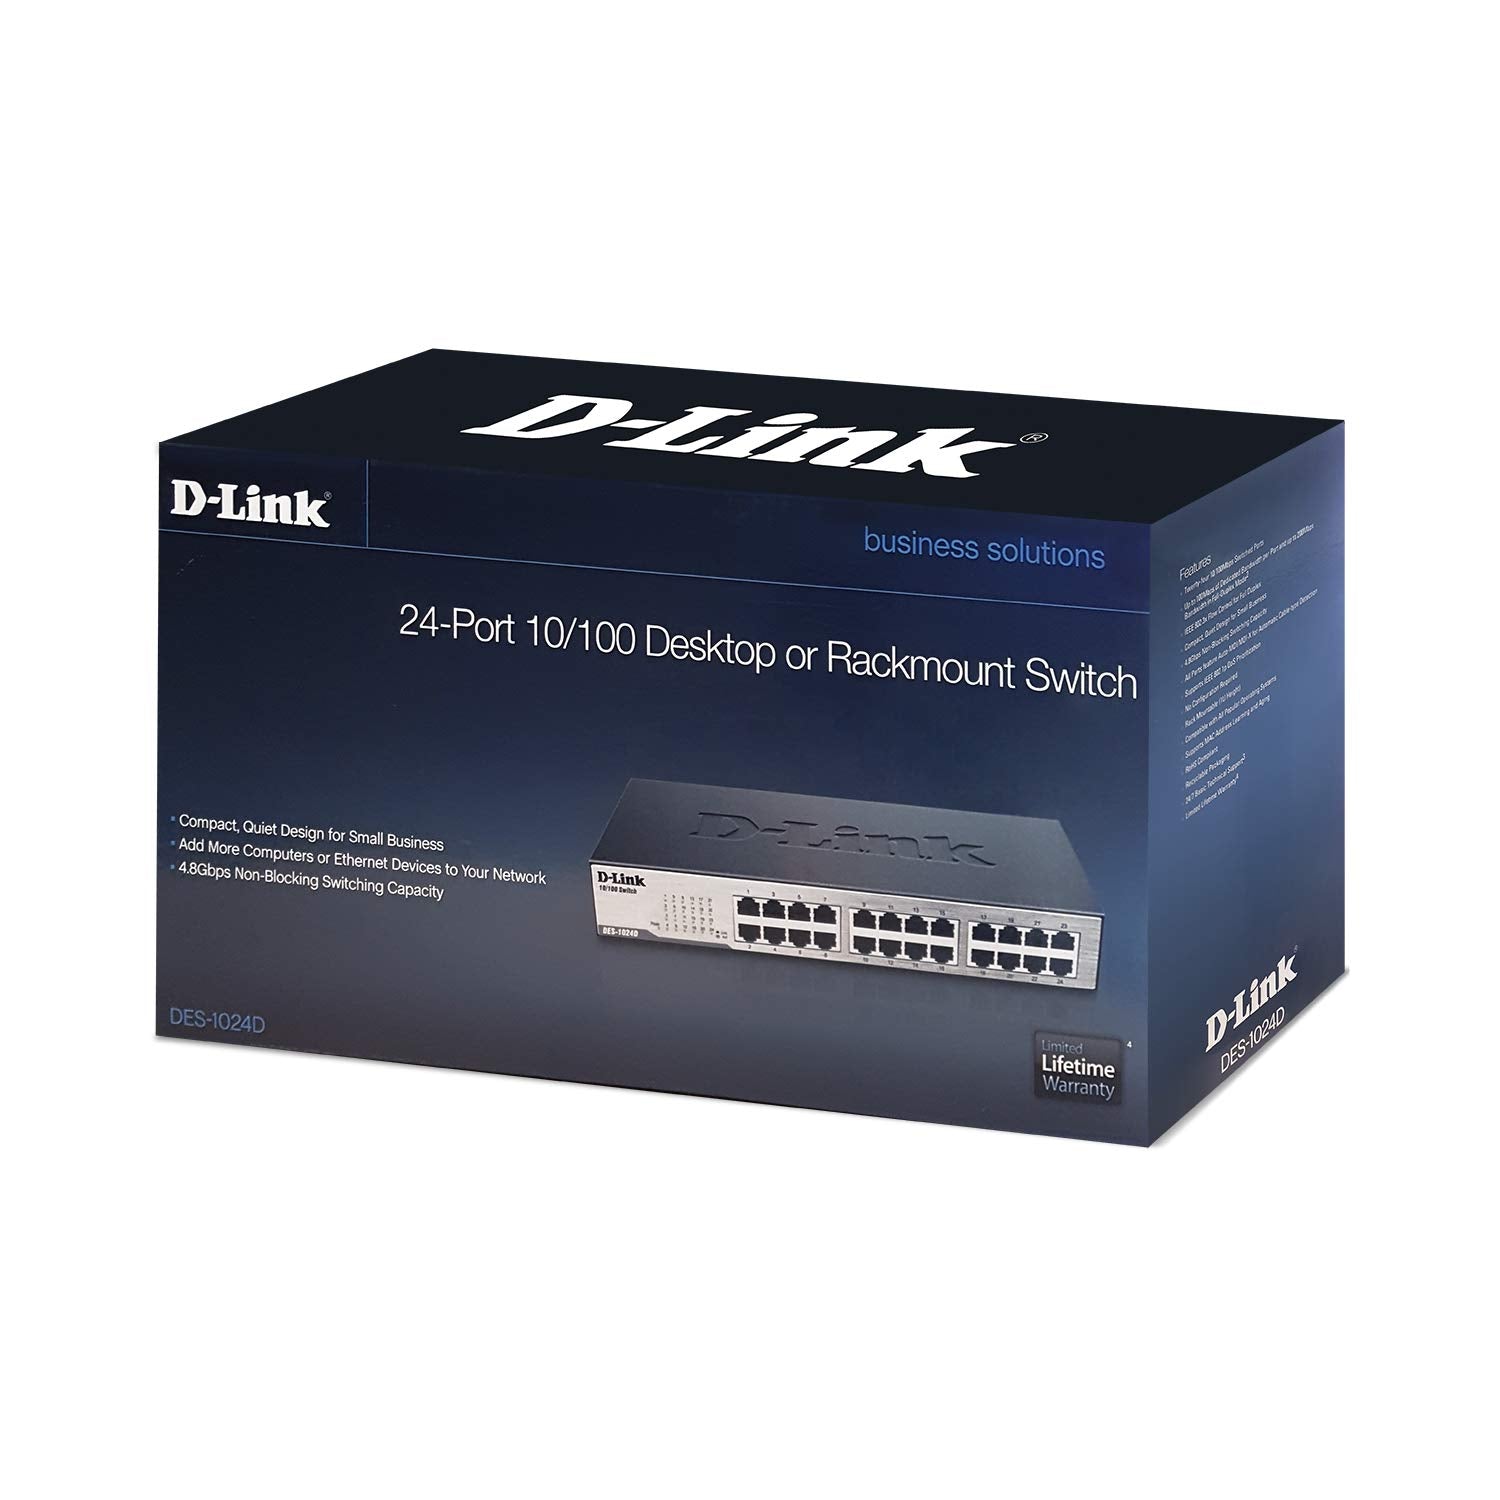 D-Link 24-Port 10/100 Unmanaged Desktop/Rackmount Switch (DES-1024D)